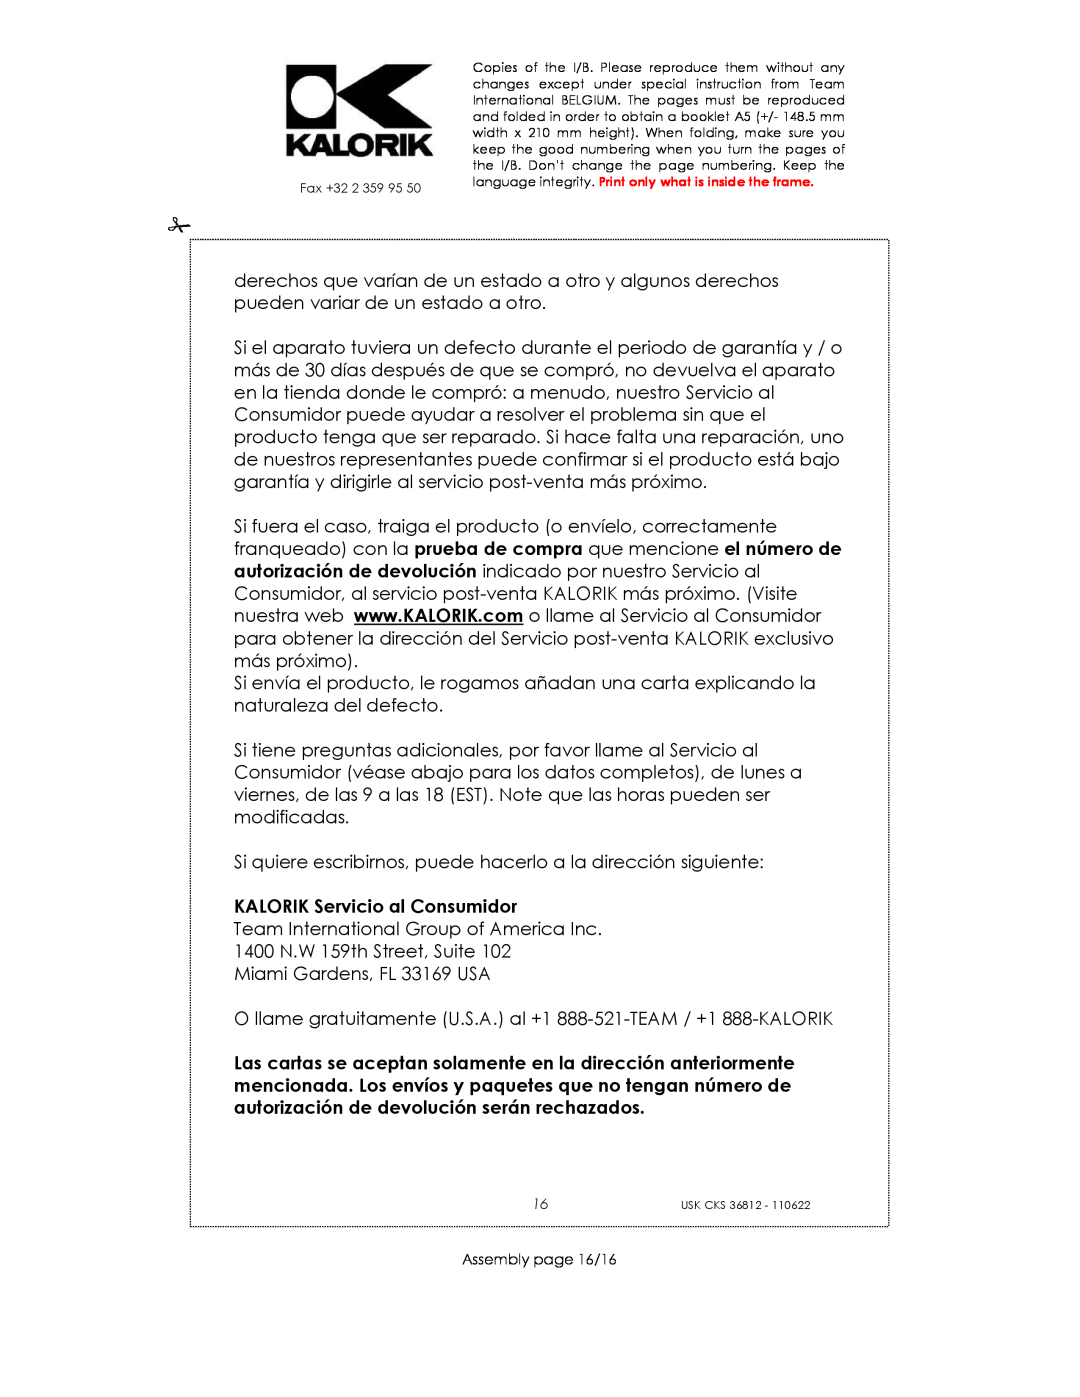 Kalorik USK CKS 36812 manual KALORIK Servicio al Consumidor, Assembly page 16/16 